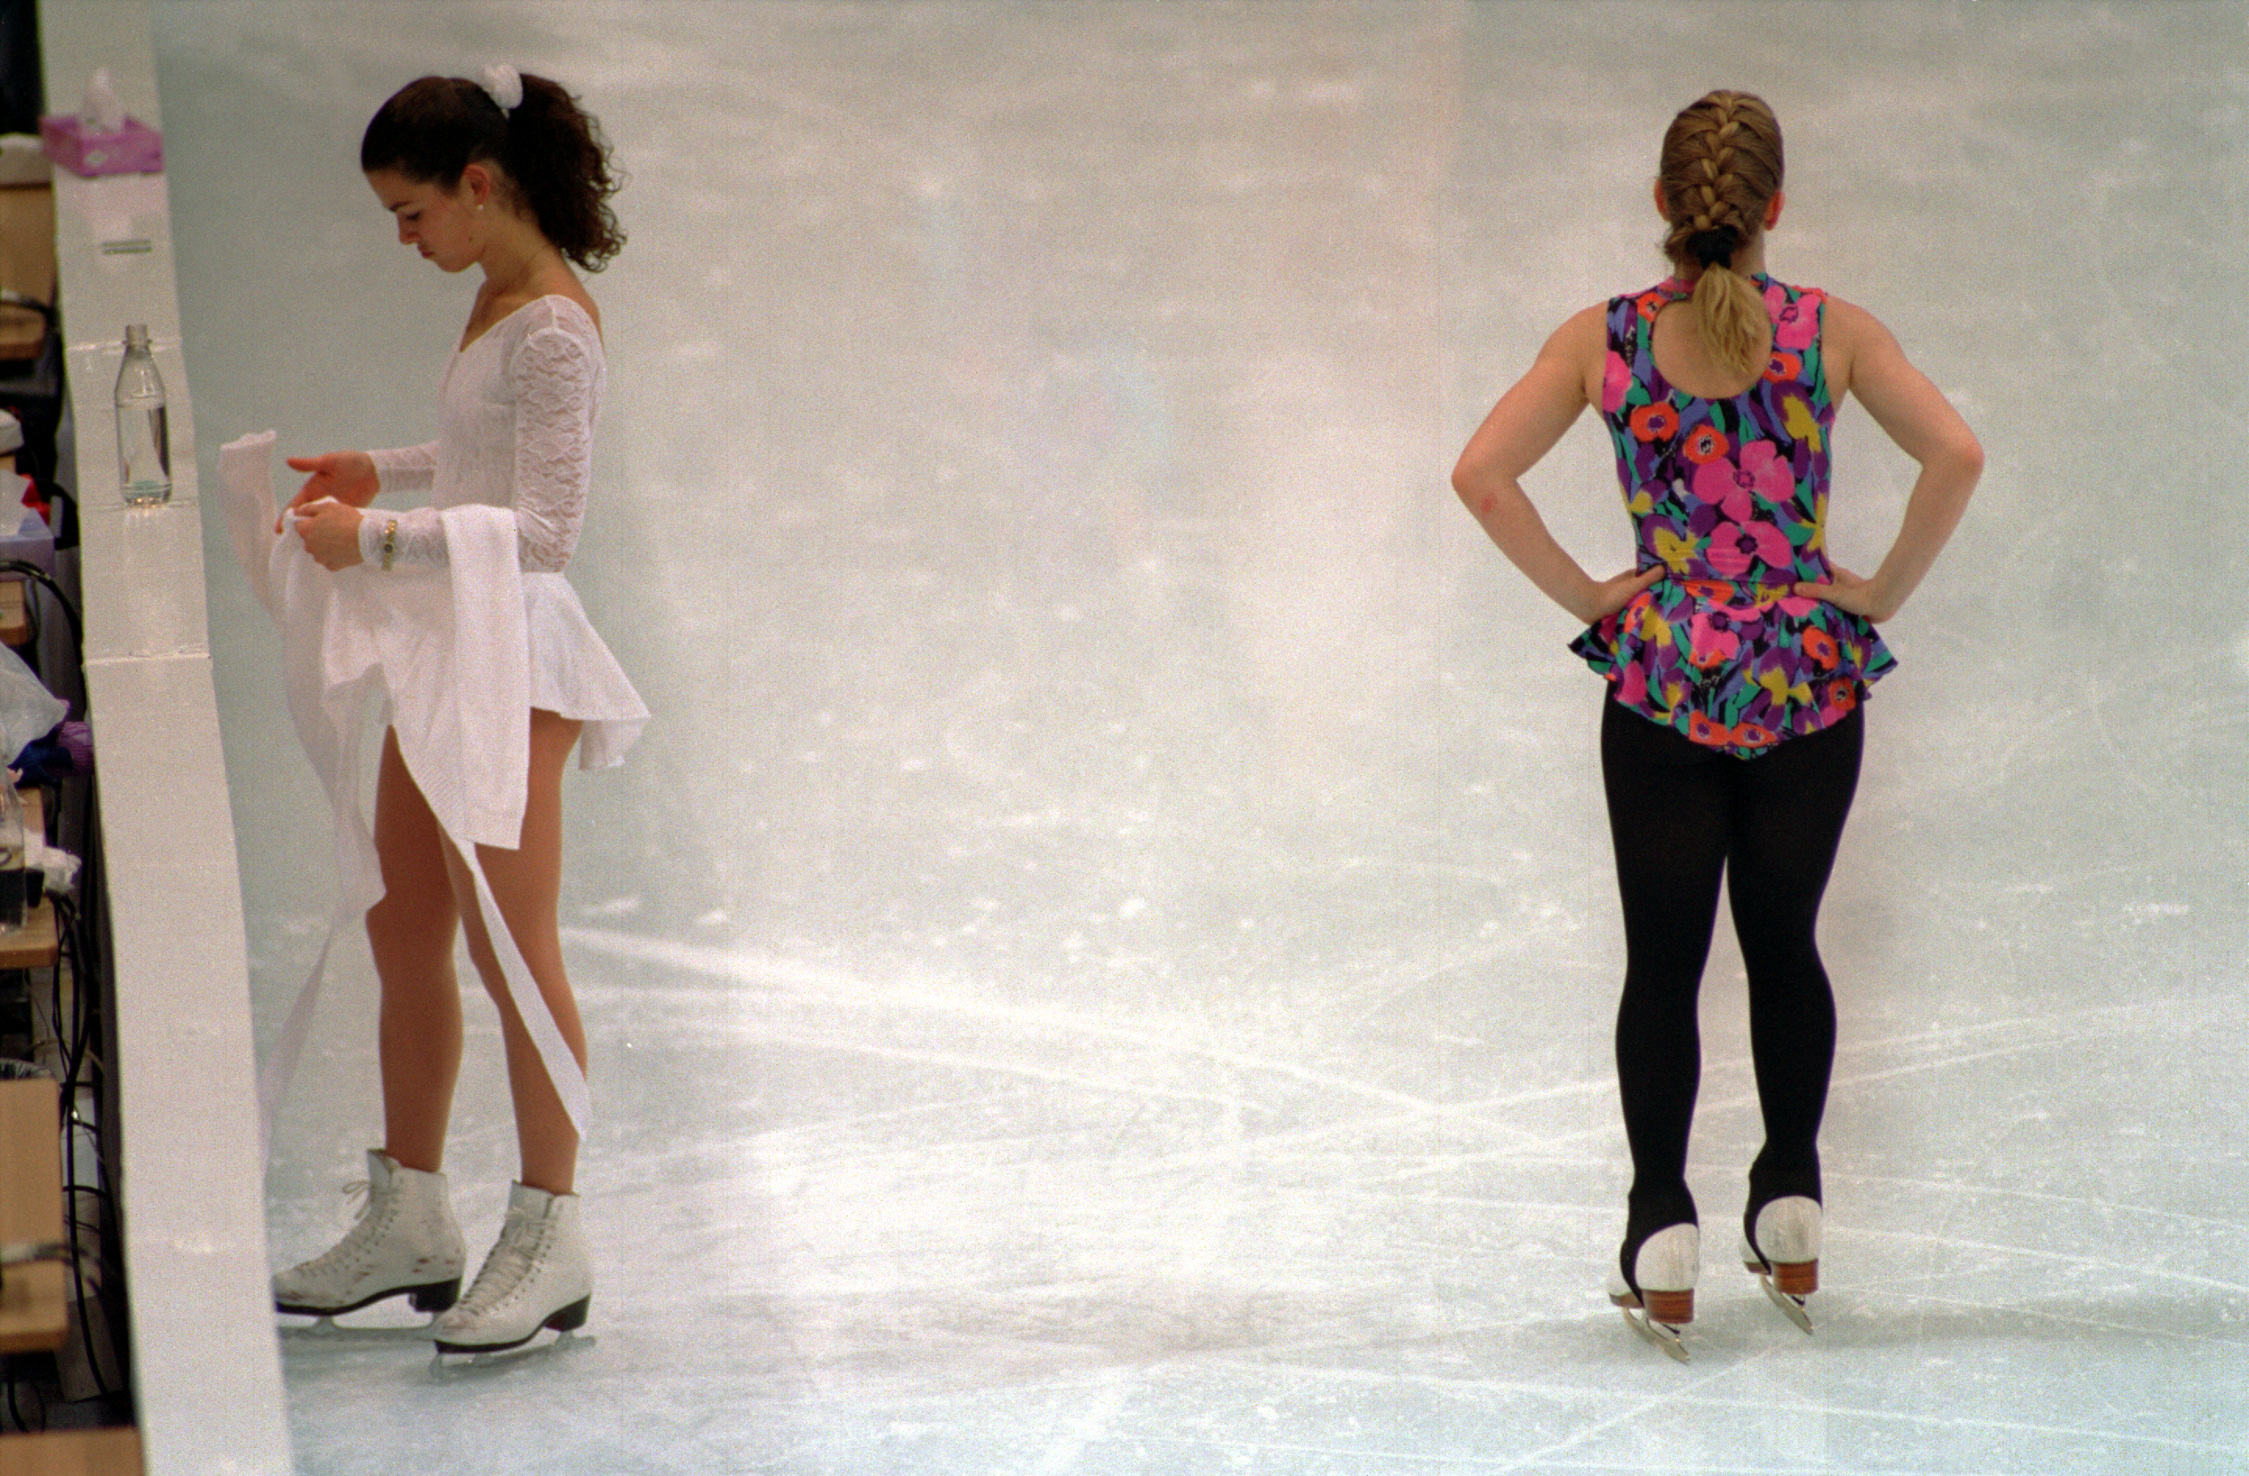 Nancy Kerrigan and Tonya Harding practicing at the 1994 Lillehammer Olympics.